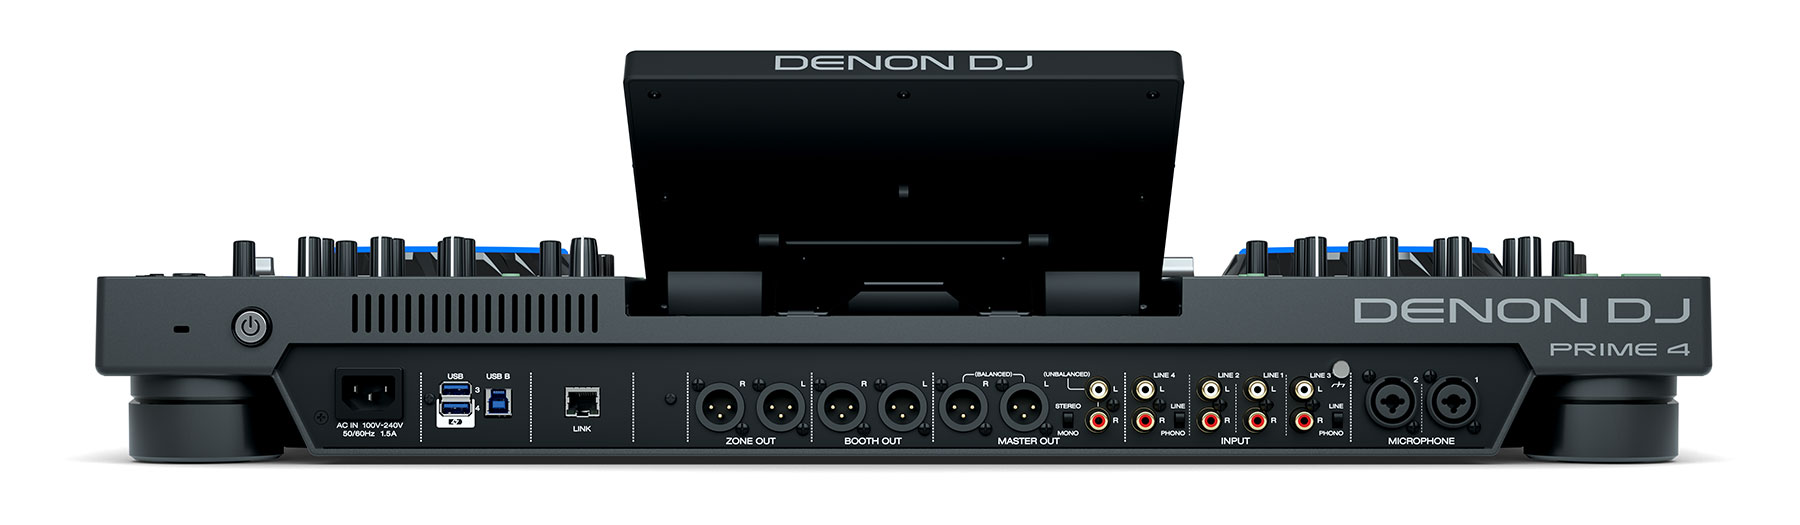 Denon DJ Prime 4 rear